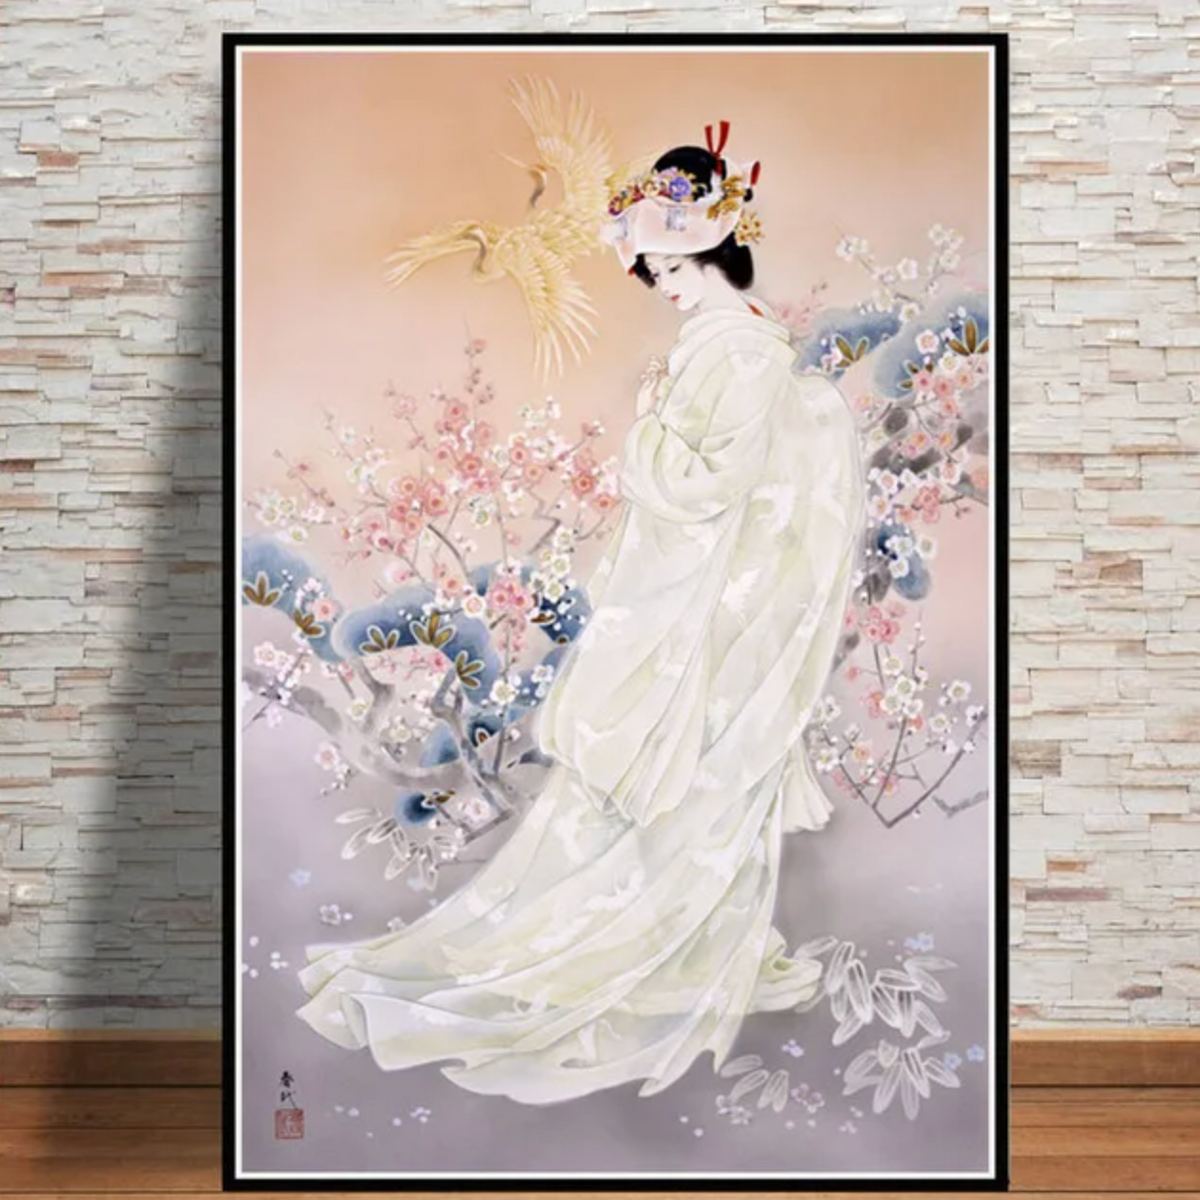 Toile Peinture Geisha Samouraï Japonais Tableau Decoration Murale